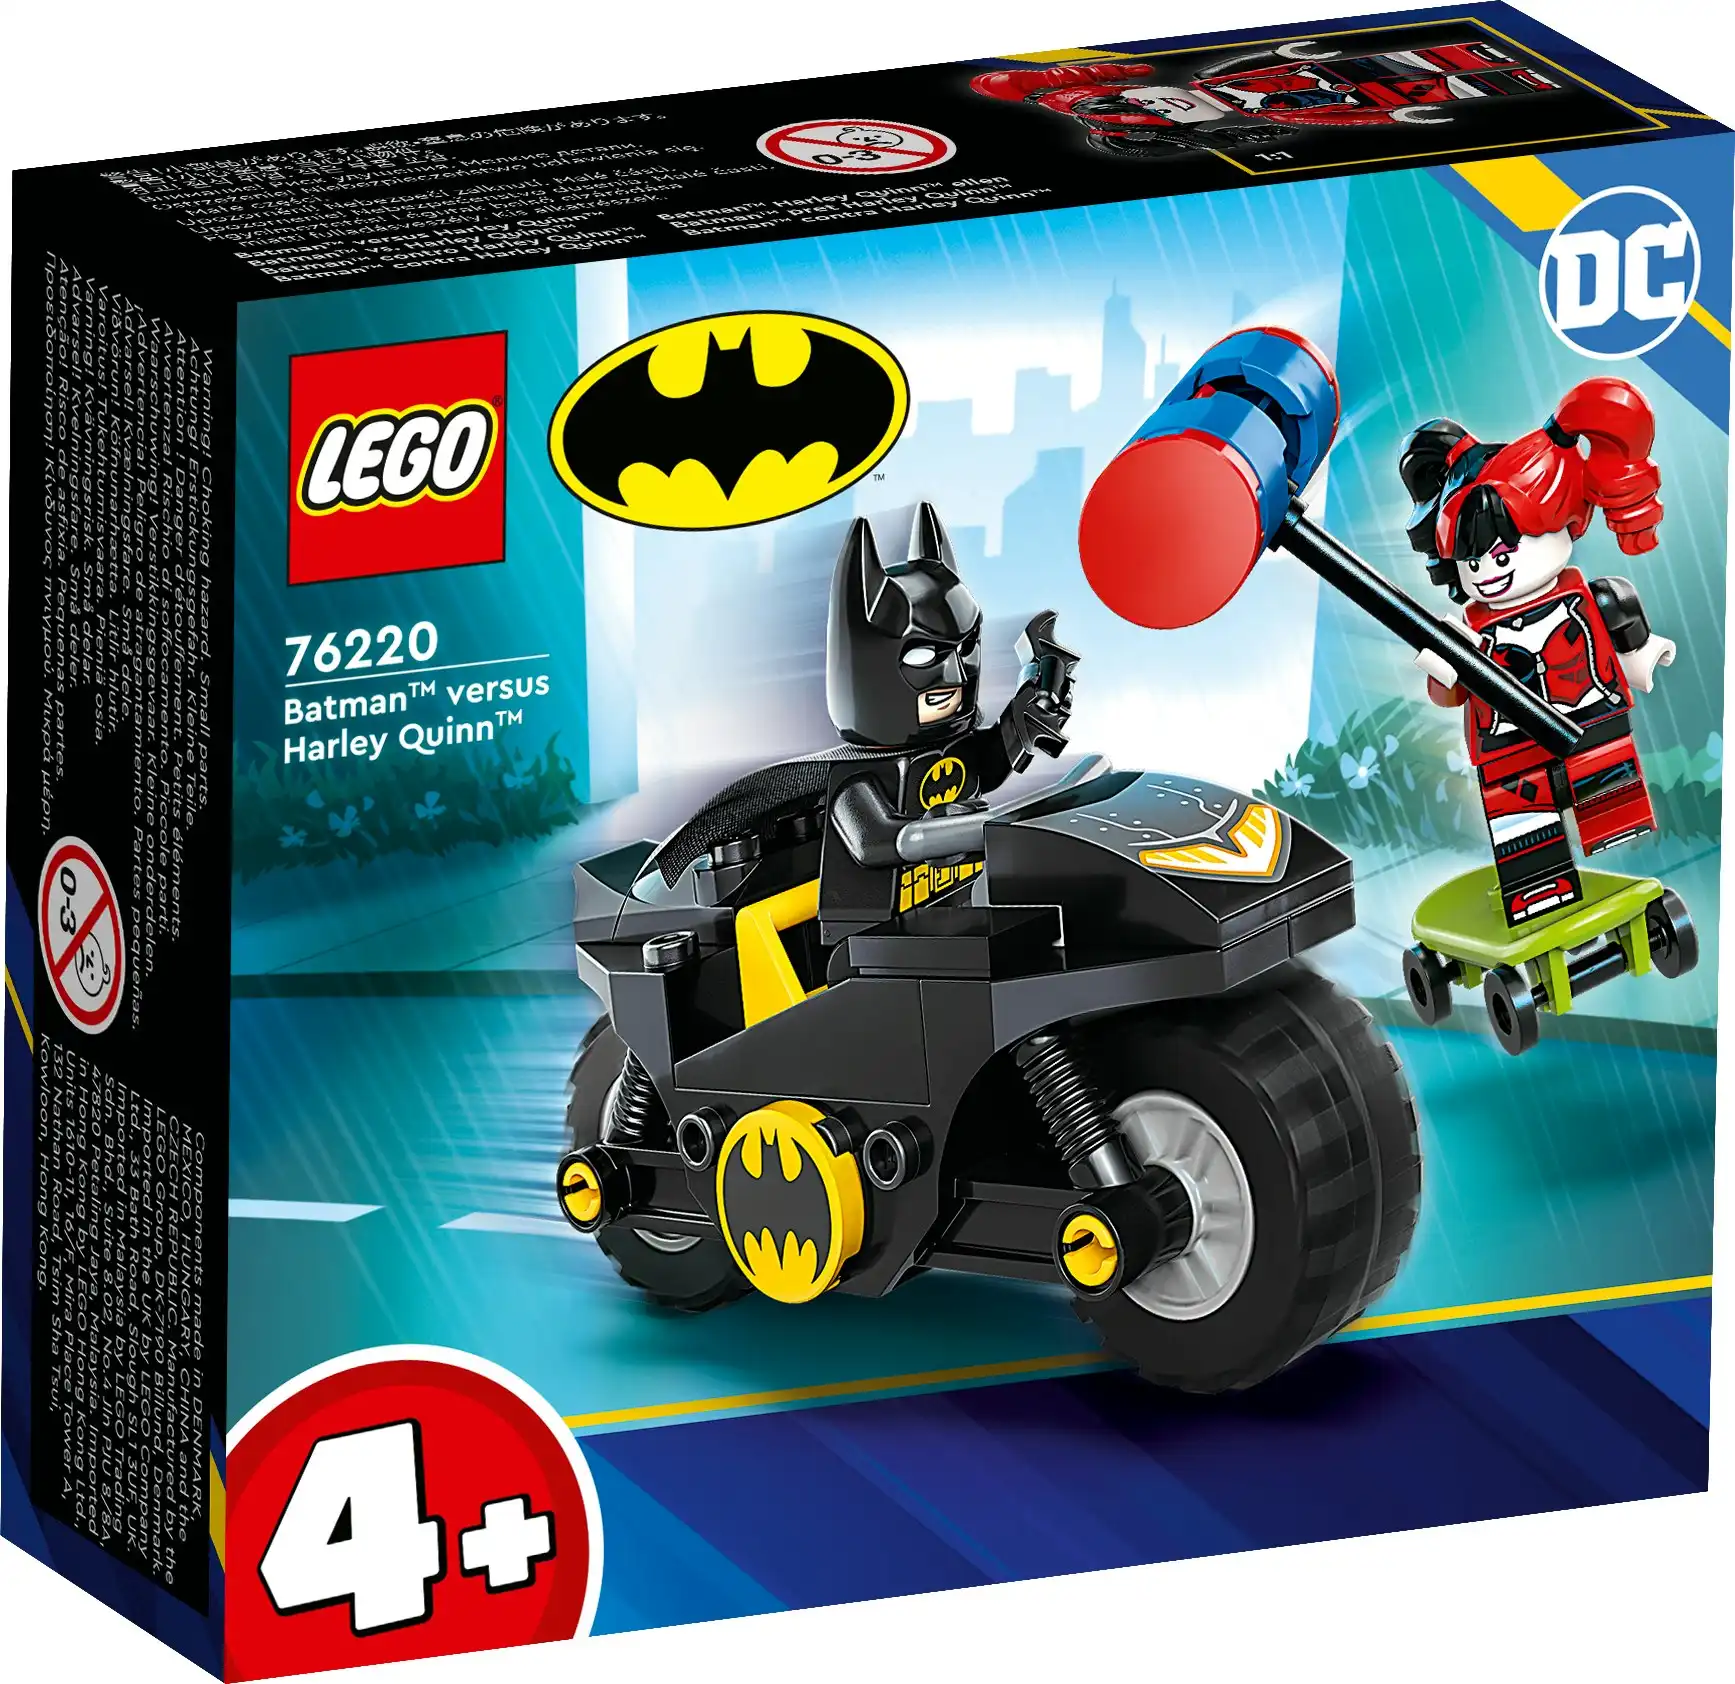 LEGO 76220 Batman versus Harley Quinn - Super Heroes 4+